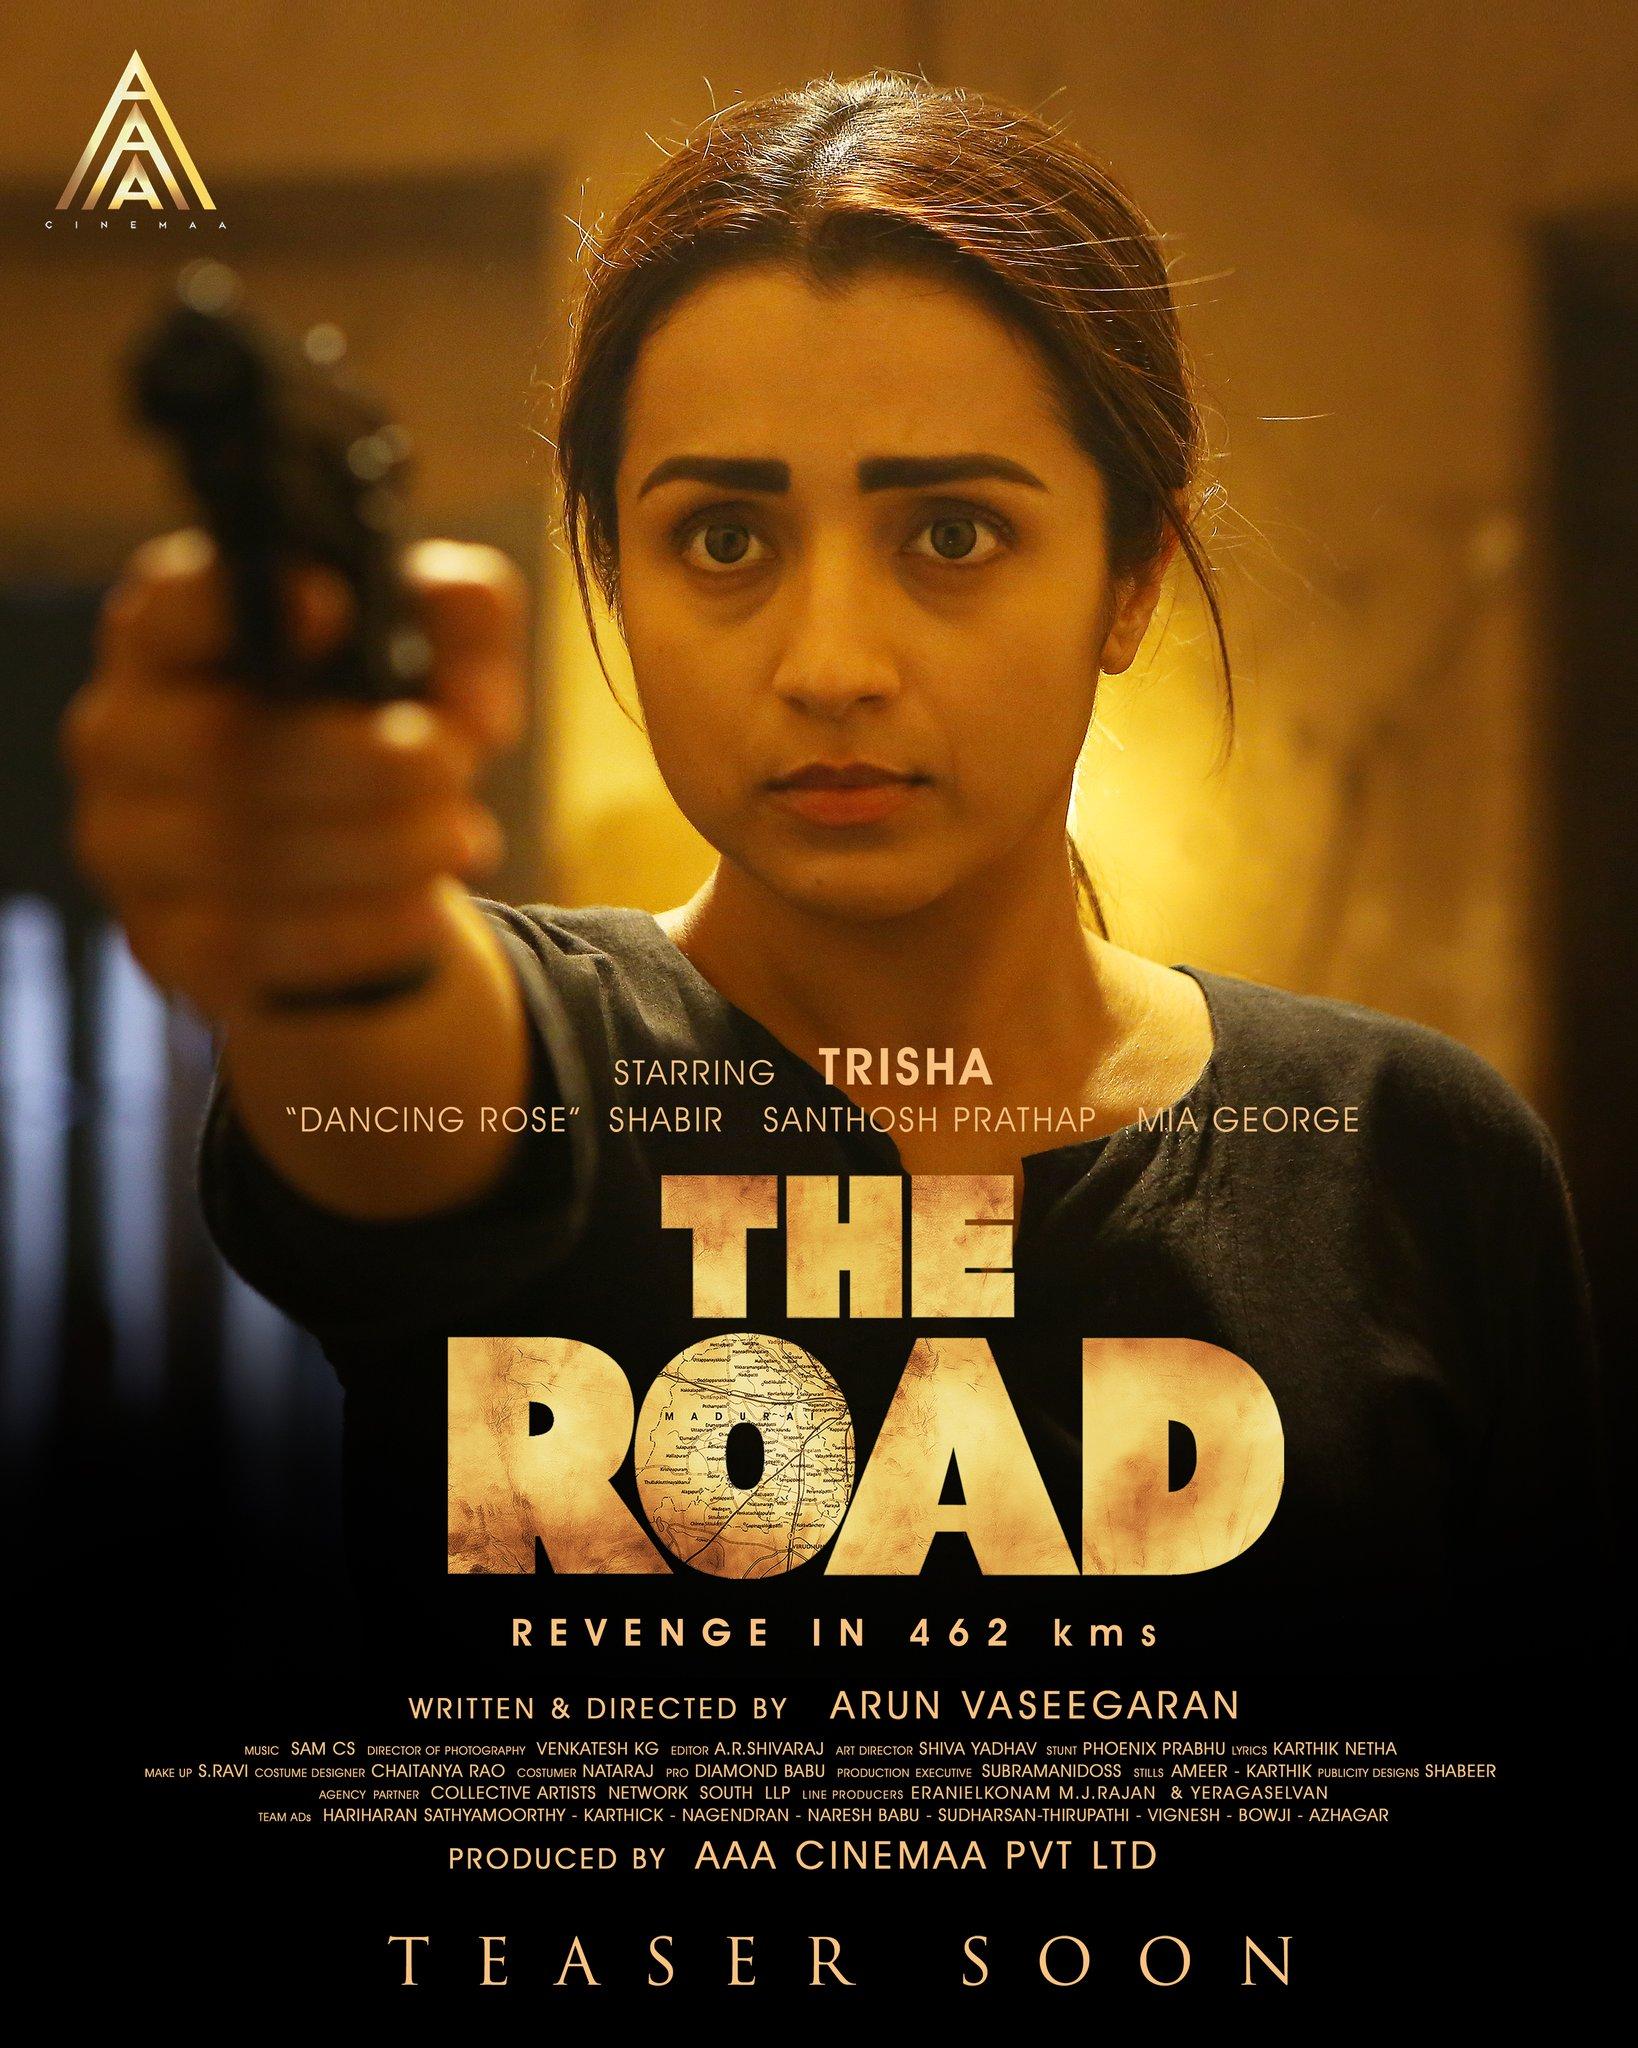 the road tamil movie review imdb